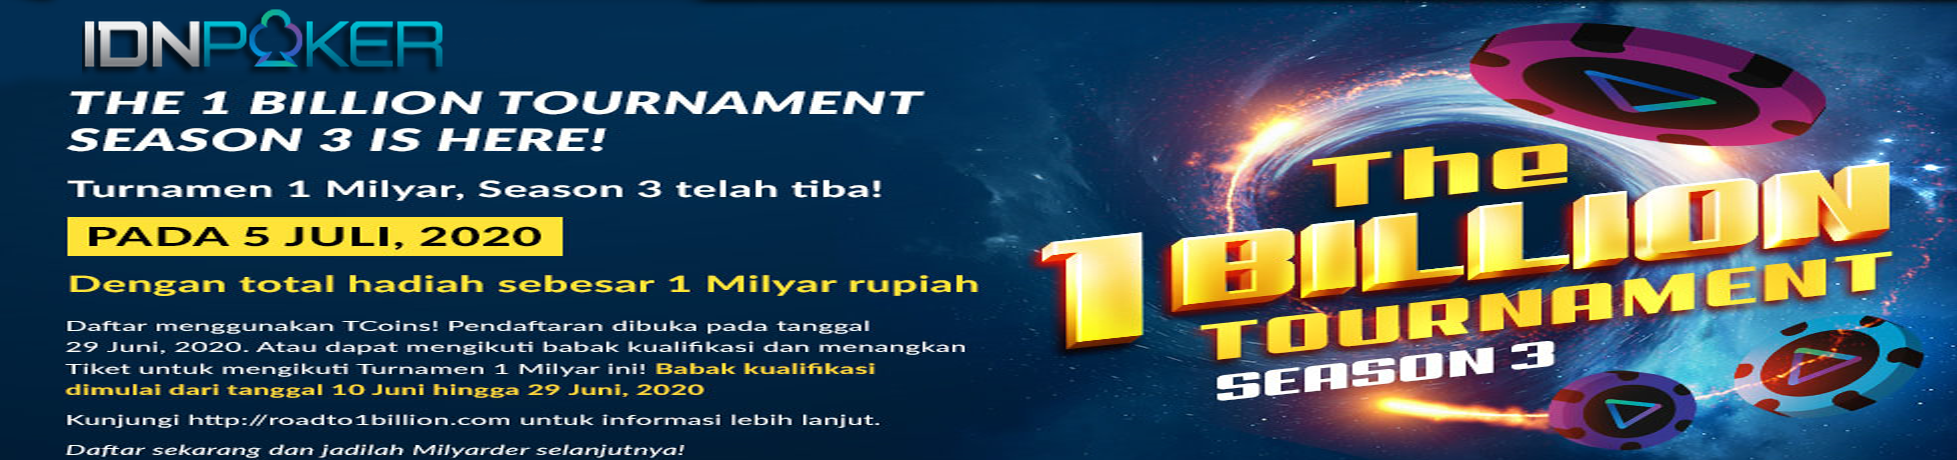 turnamen IDN Poker